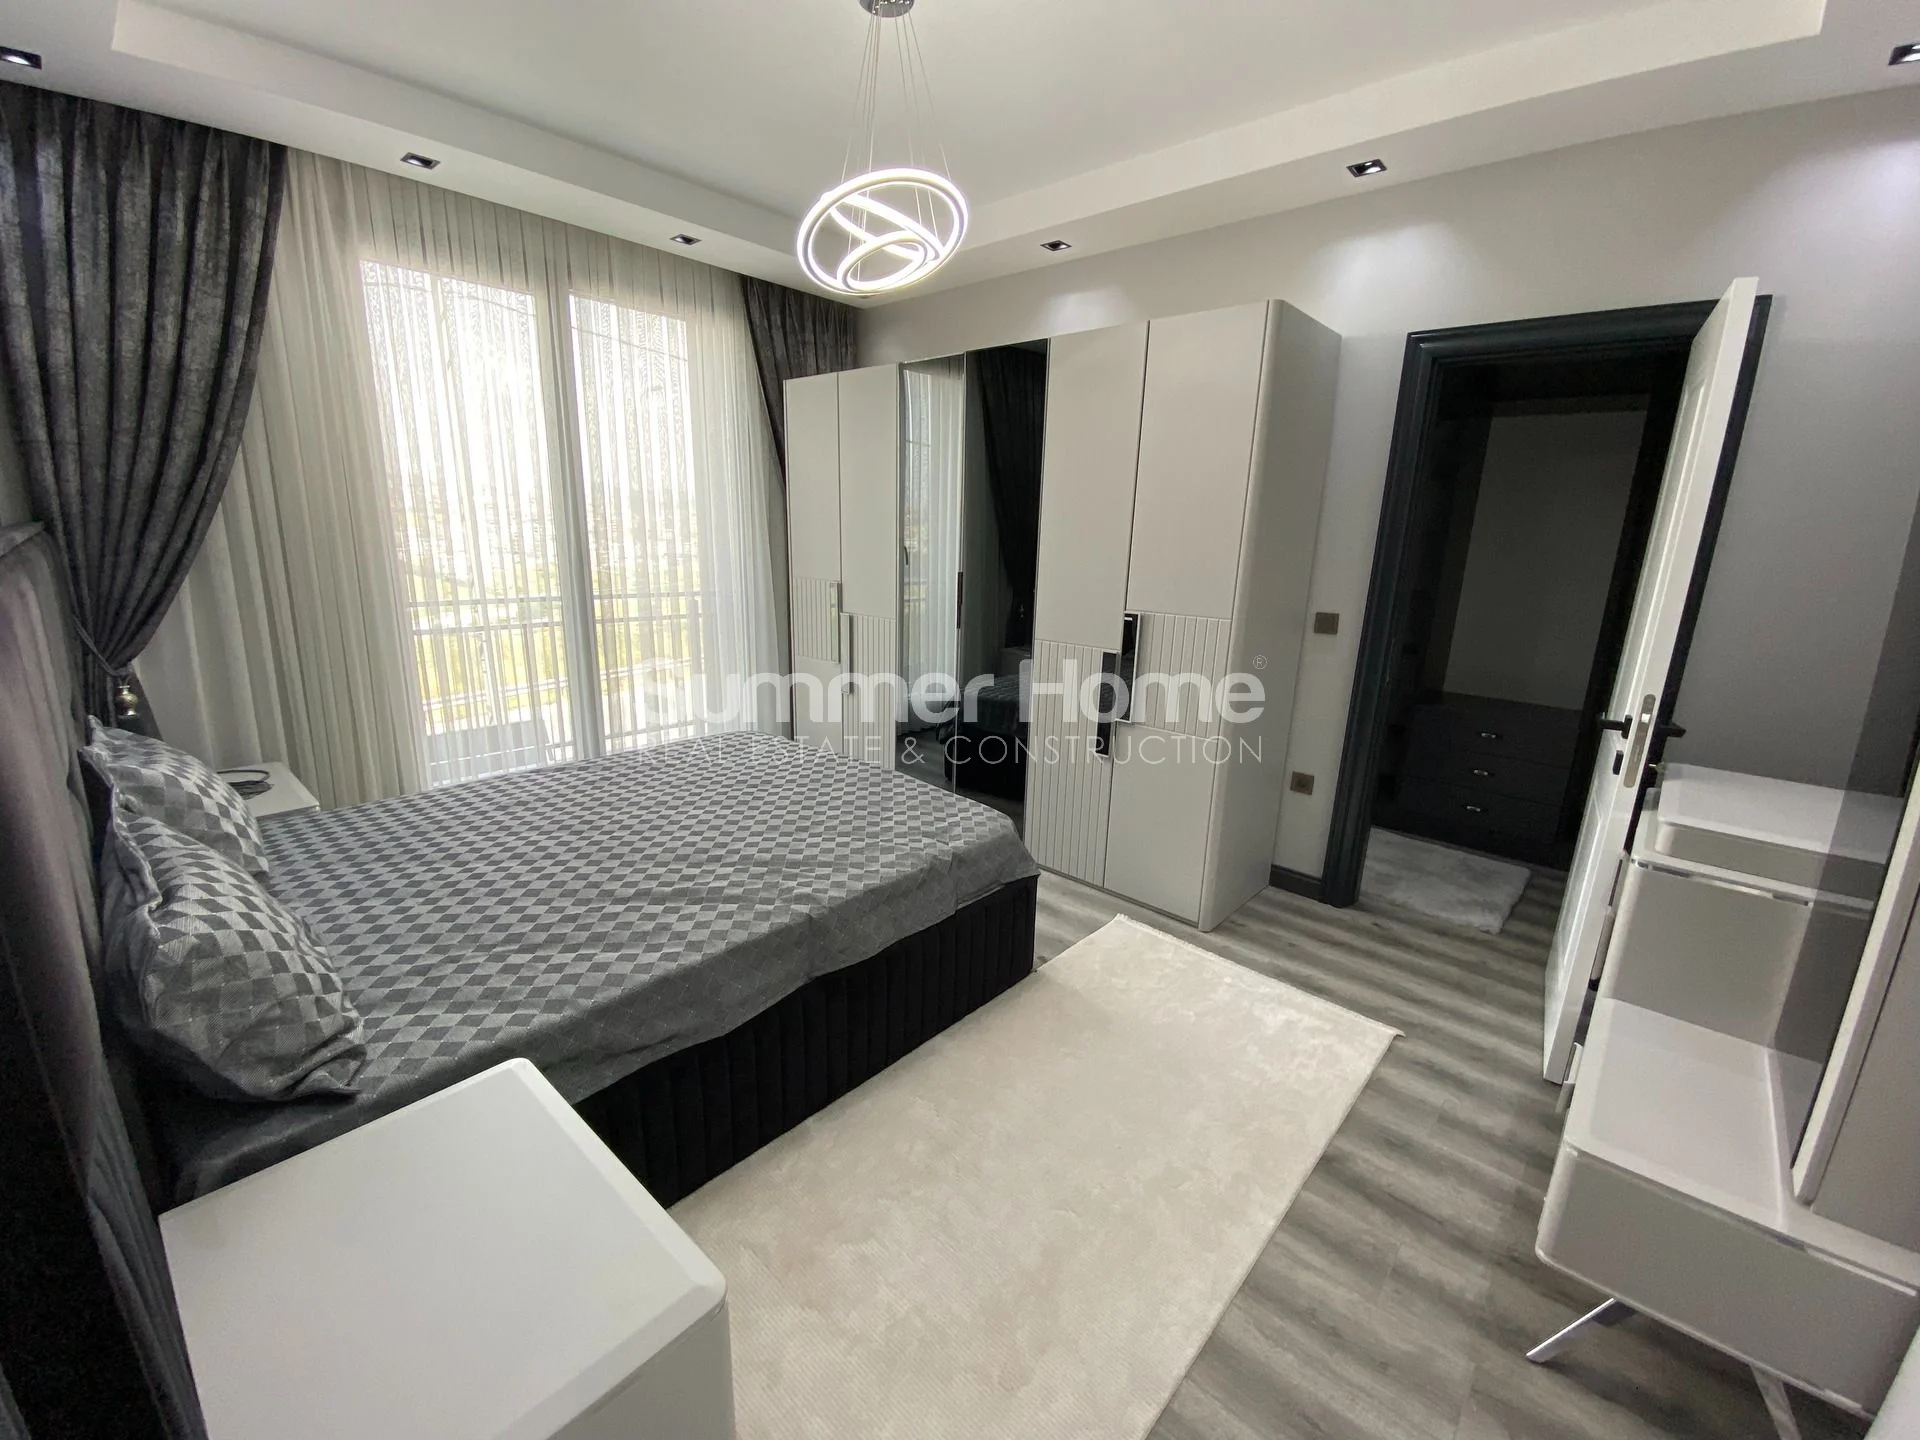 Luxury Apartments with Sea View in Beylikduzu, Istanbul Interior - 32